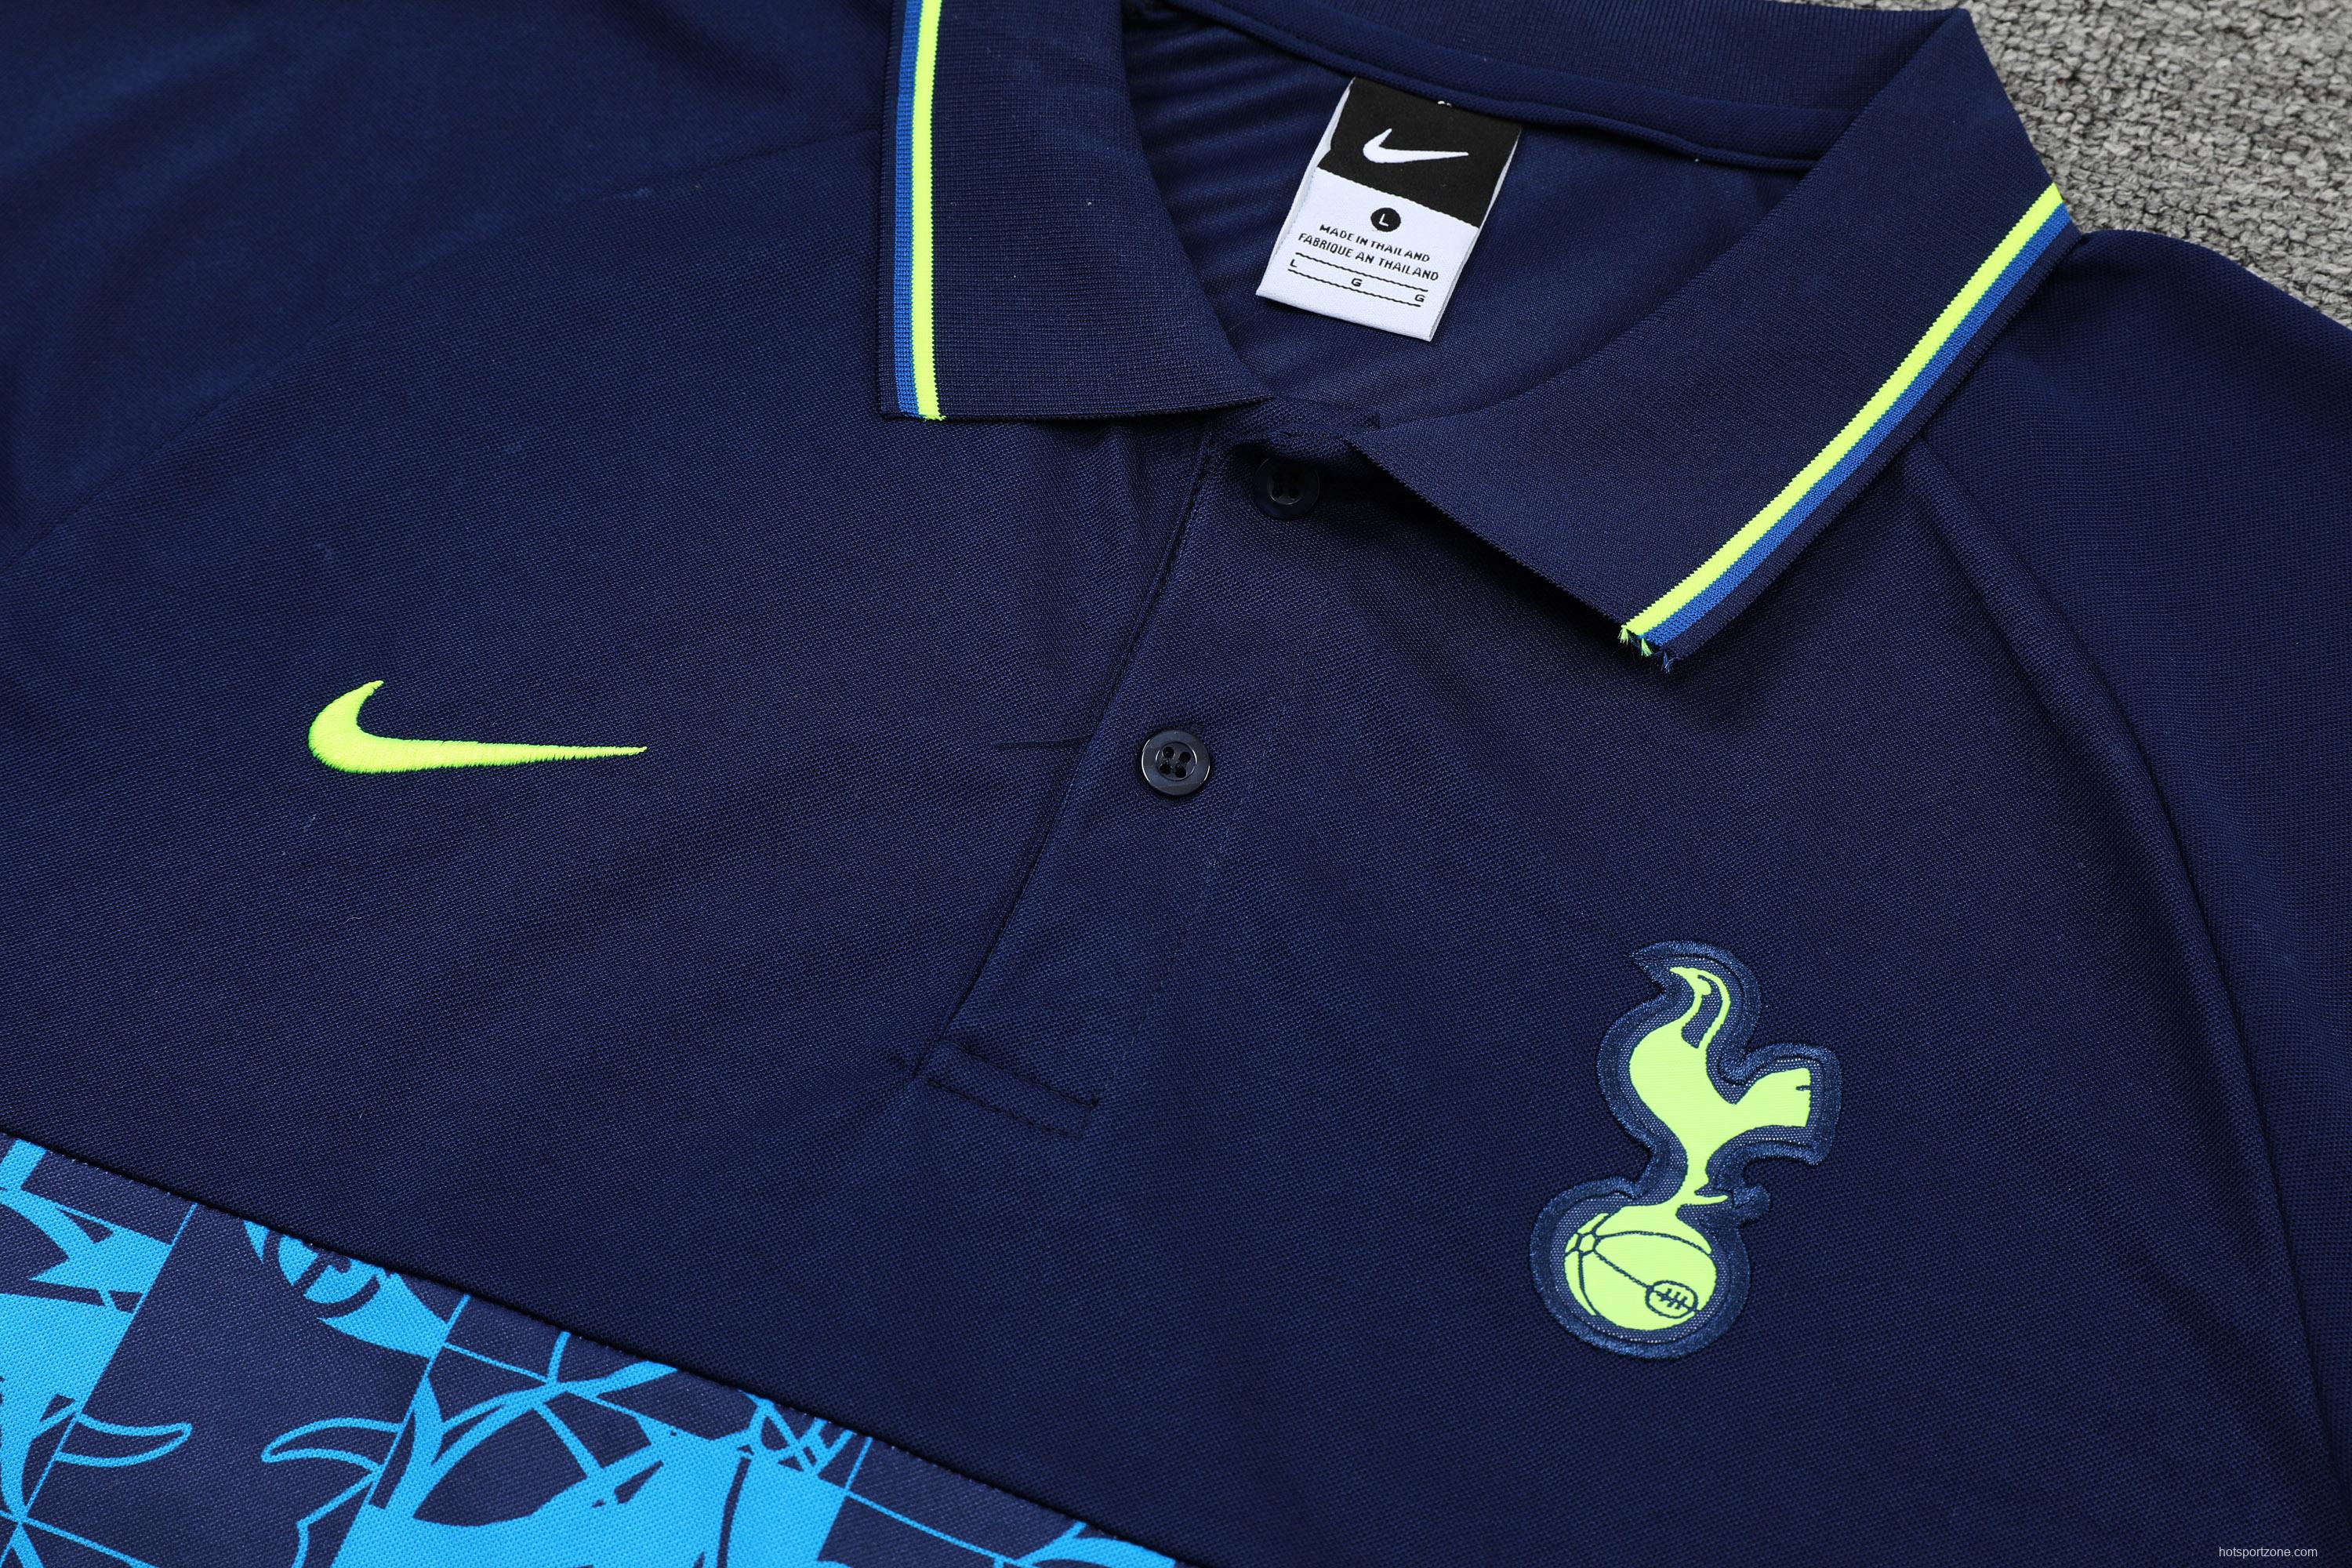 Tottenham Hotspur POLO kit royal blue (not sold separately)